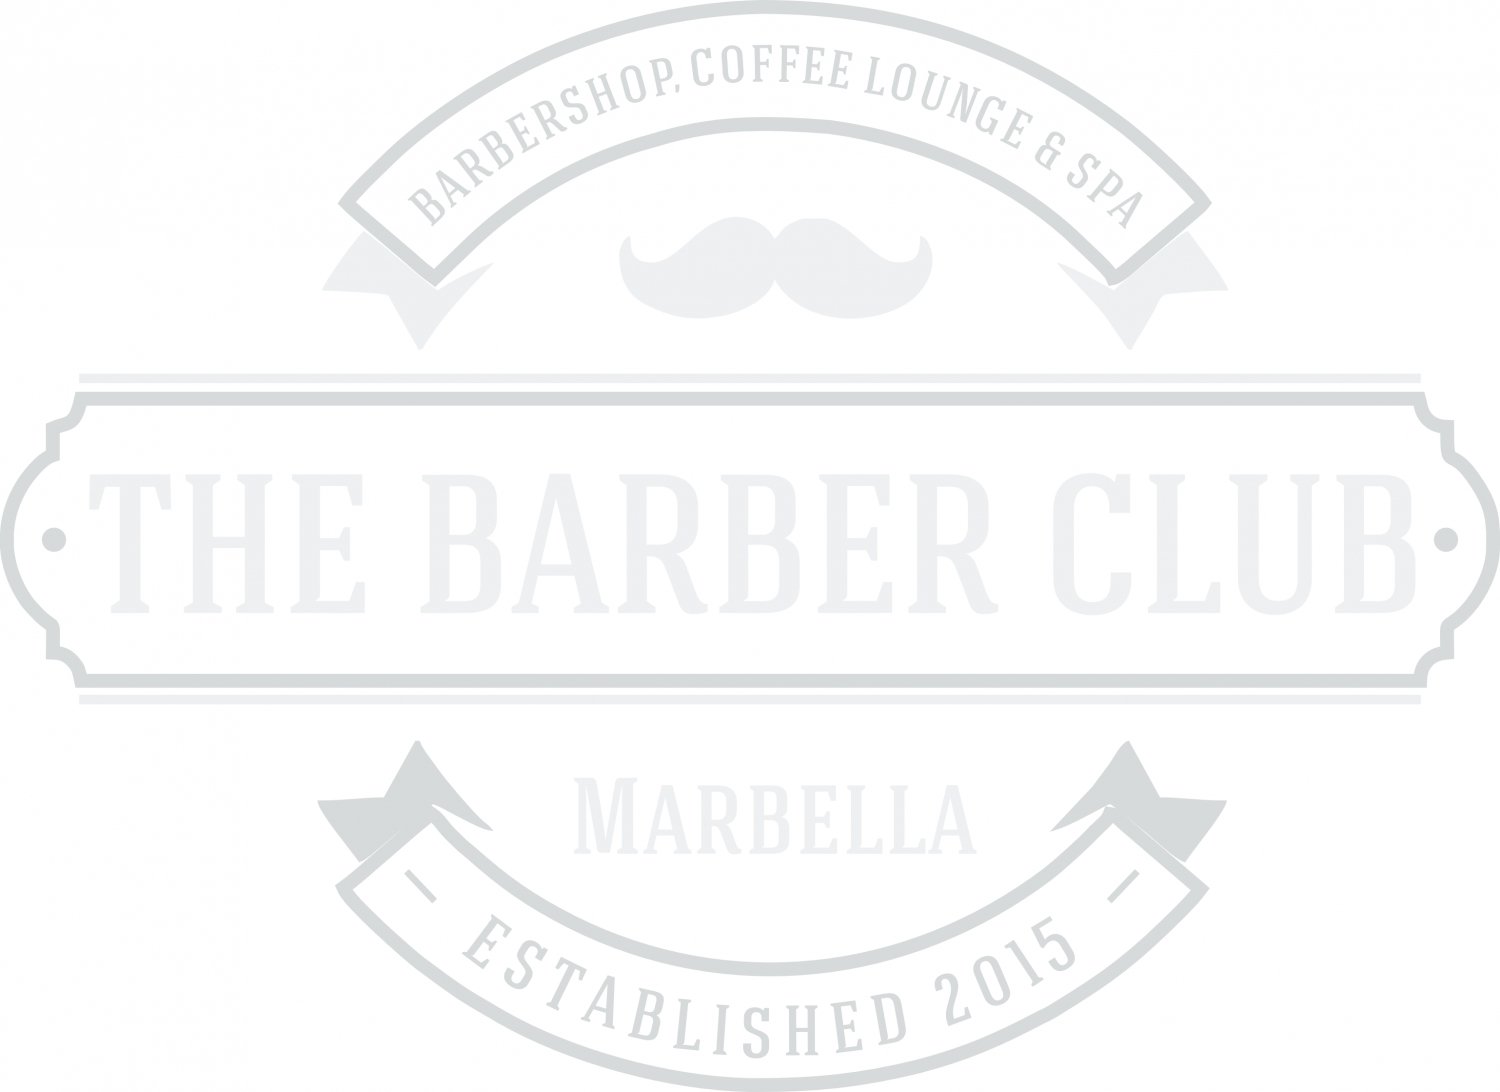 The Barber Club